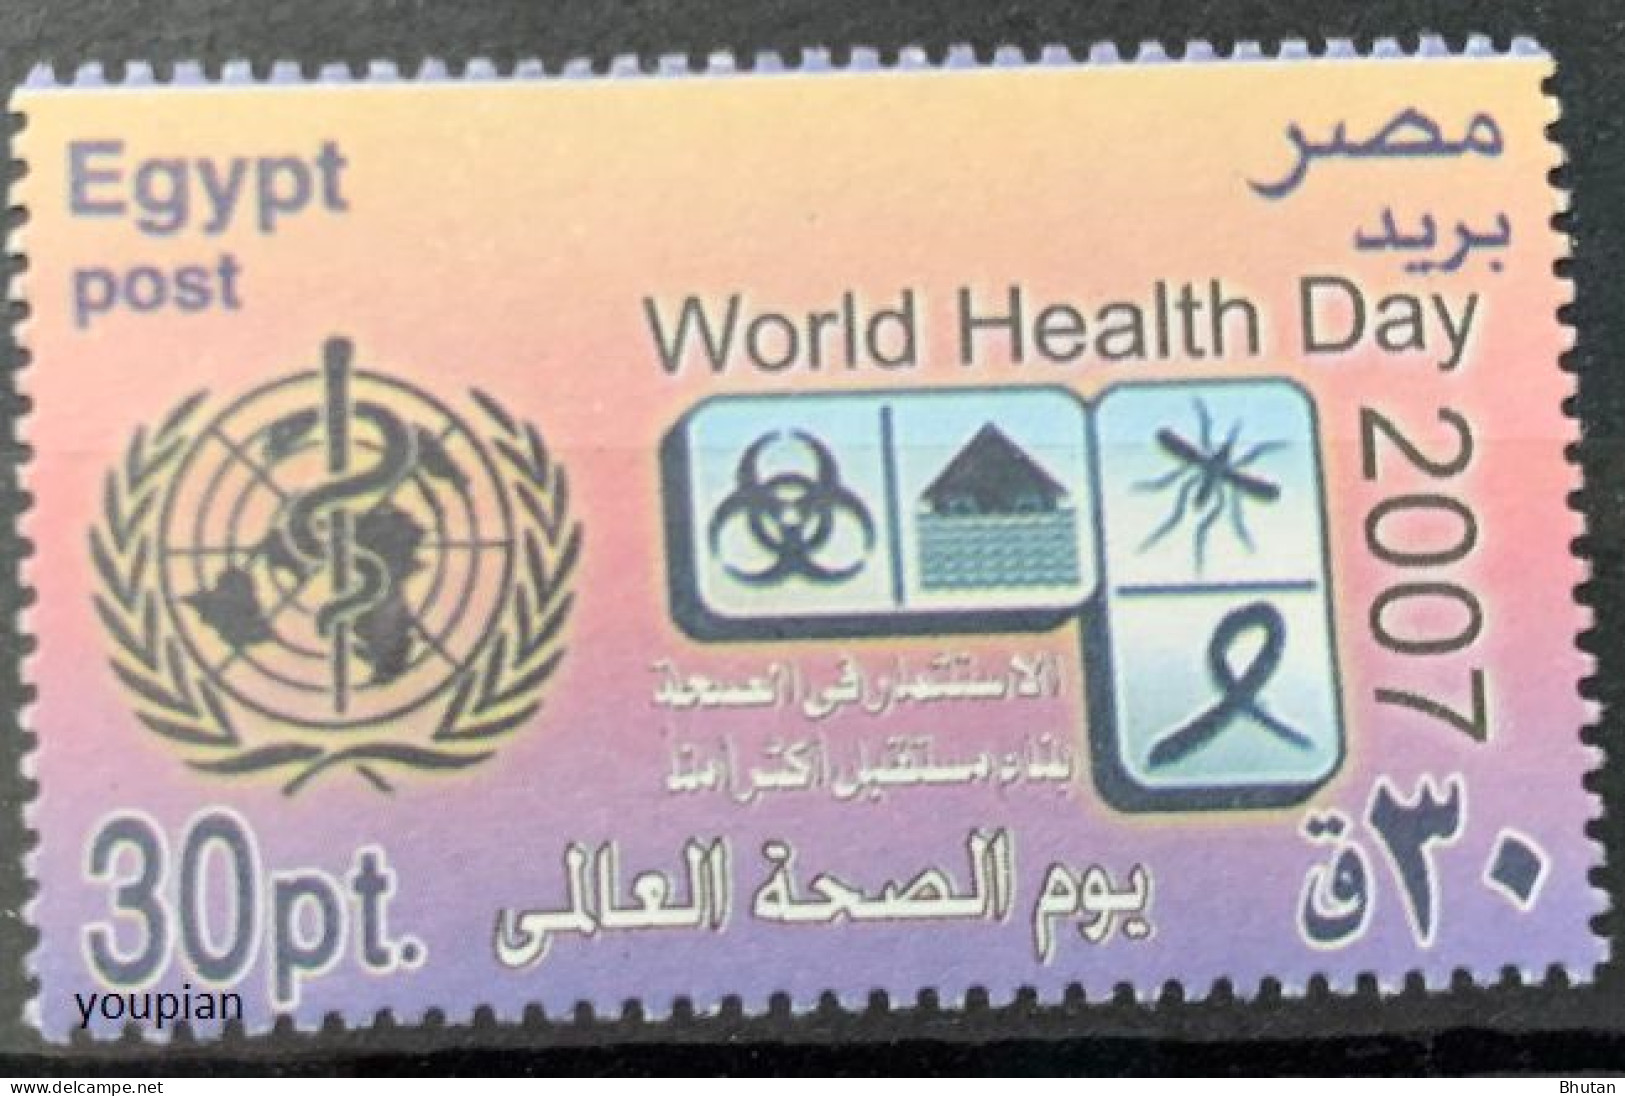 Egypt 2007, World Health Day, MNH Single Stamp - Neufs